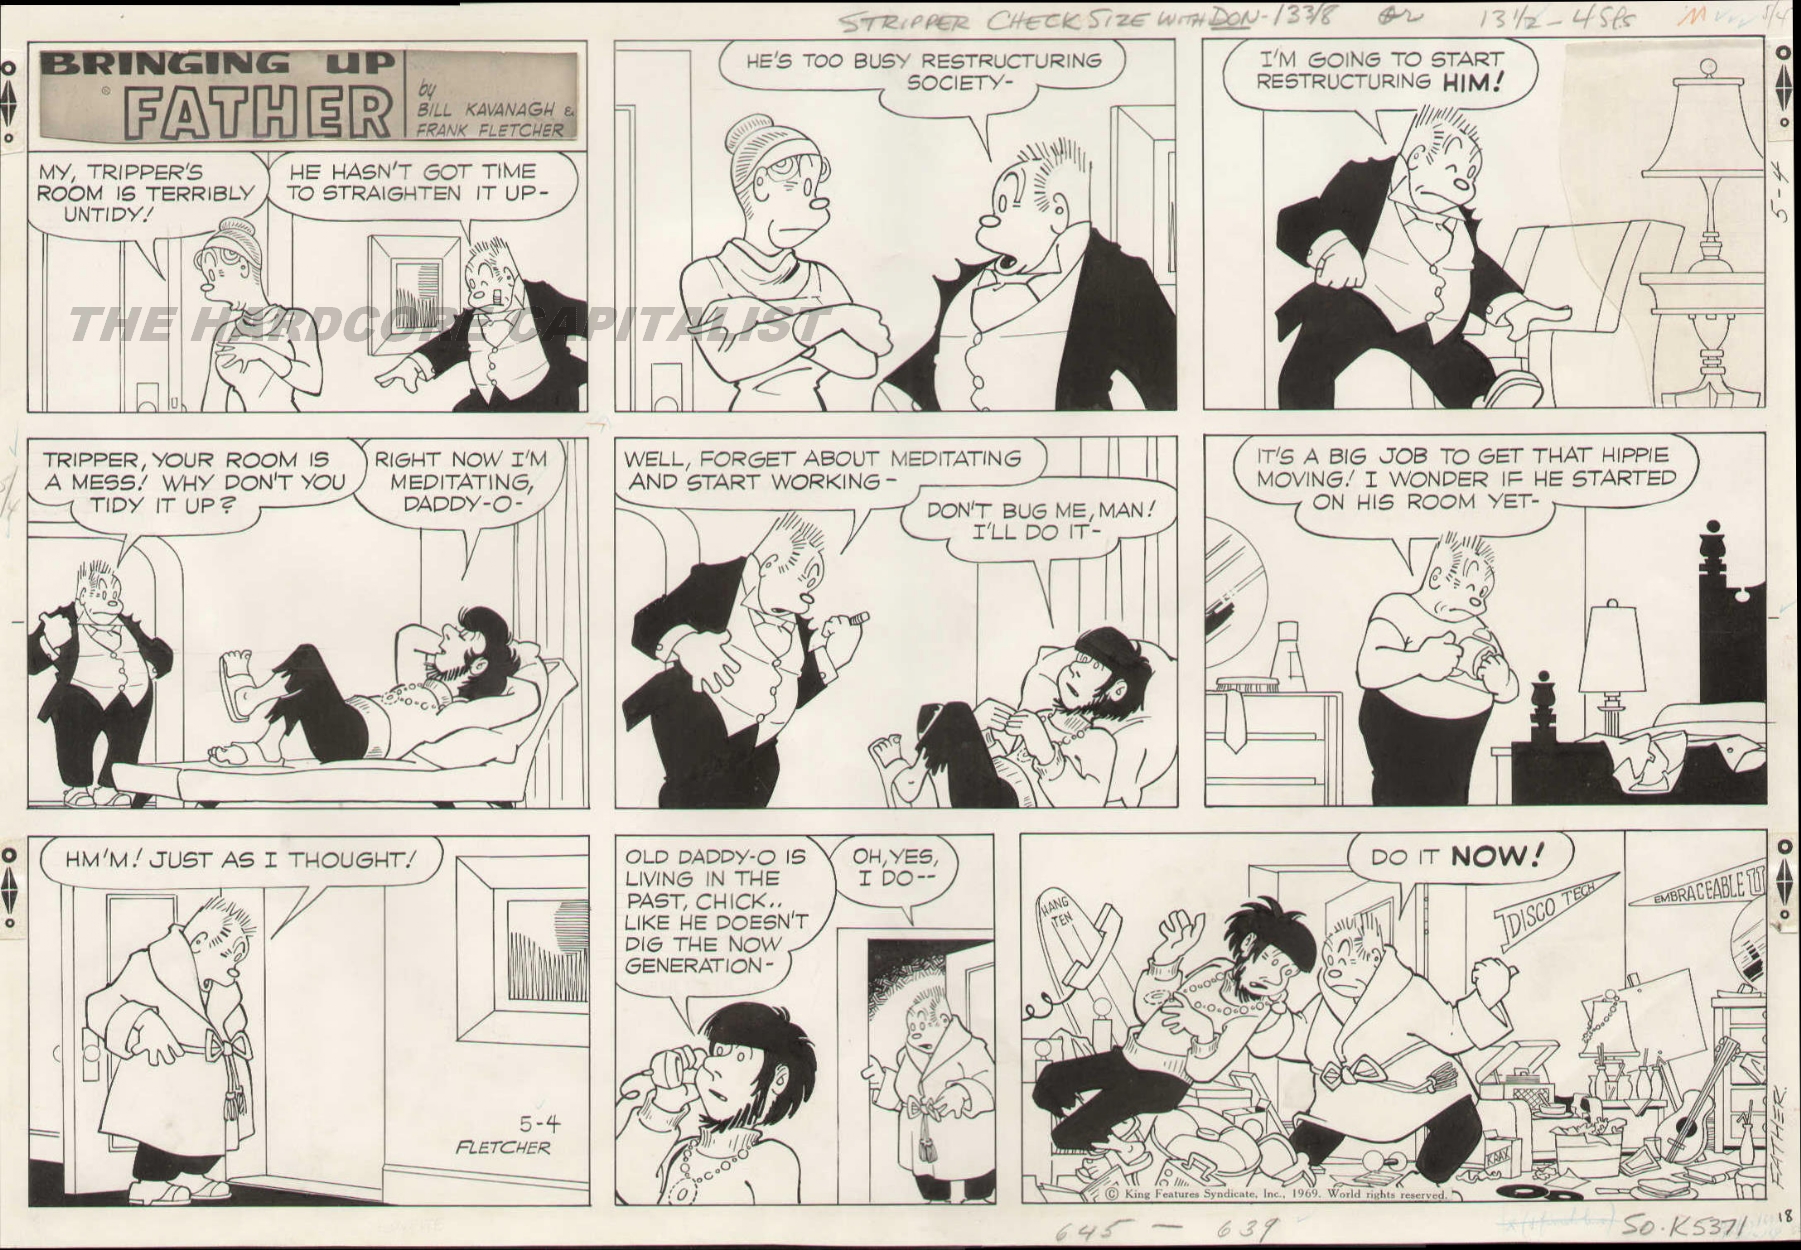 1969 BRINGING UP FATHER SUNDAY NEWSPAPER STRIP ORIGINAL ART - LAZY HIPPIE!,  in Jason G's Newspaper Comic Strip Art Comic Art Gallery Room